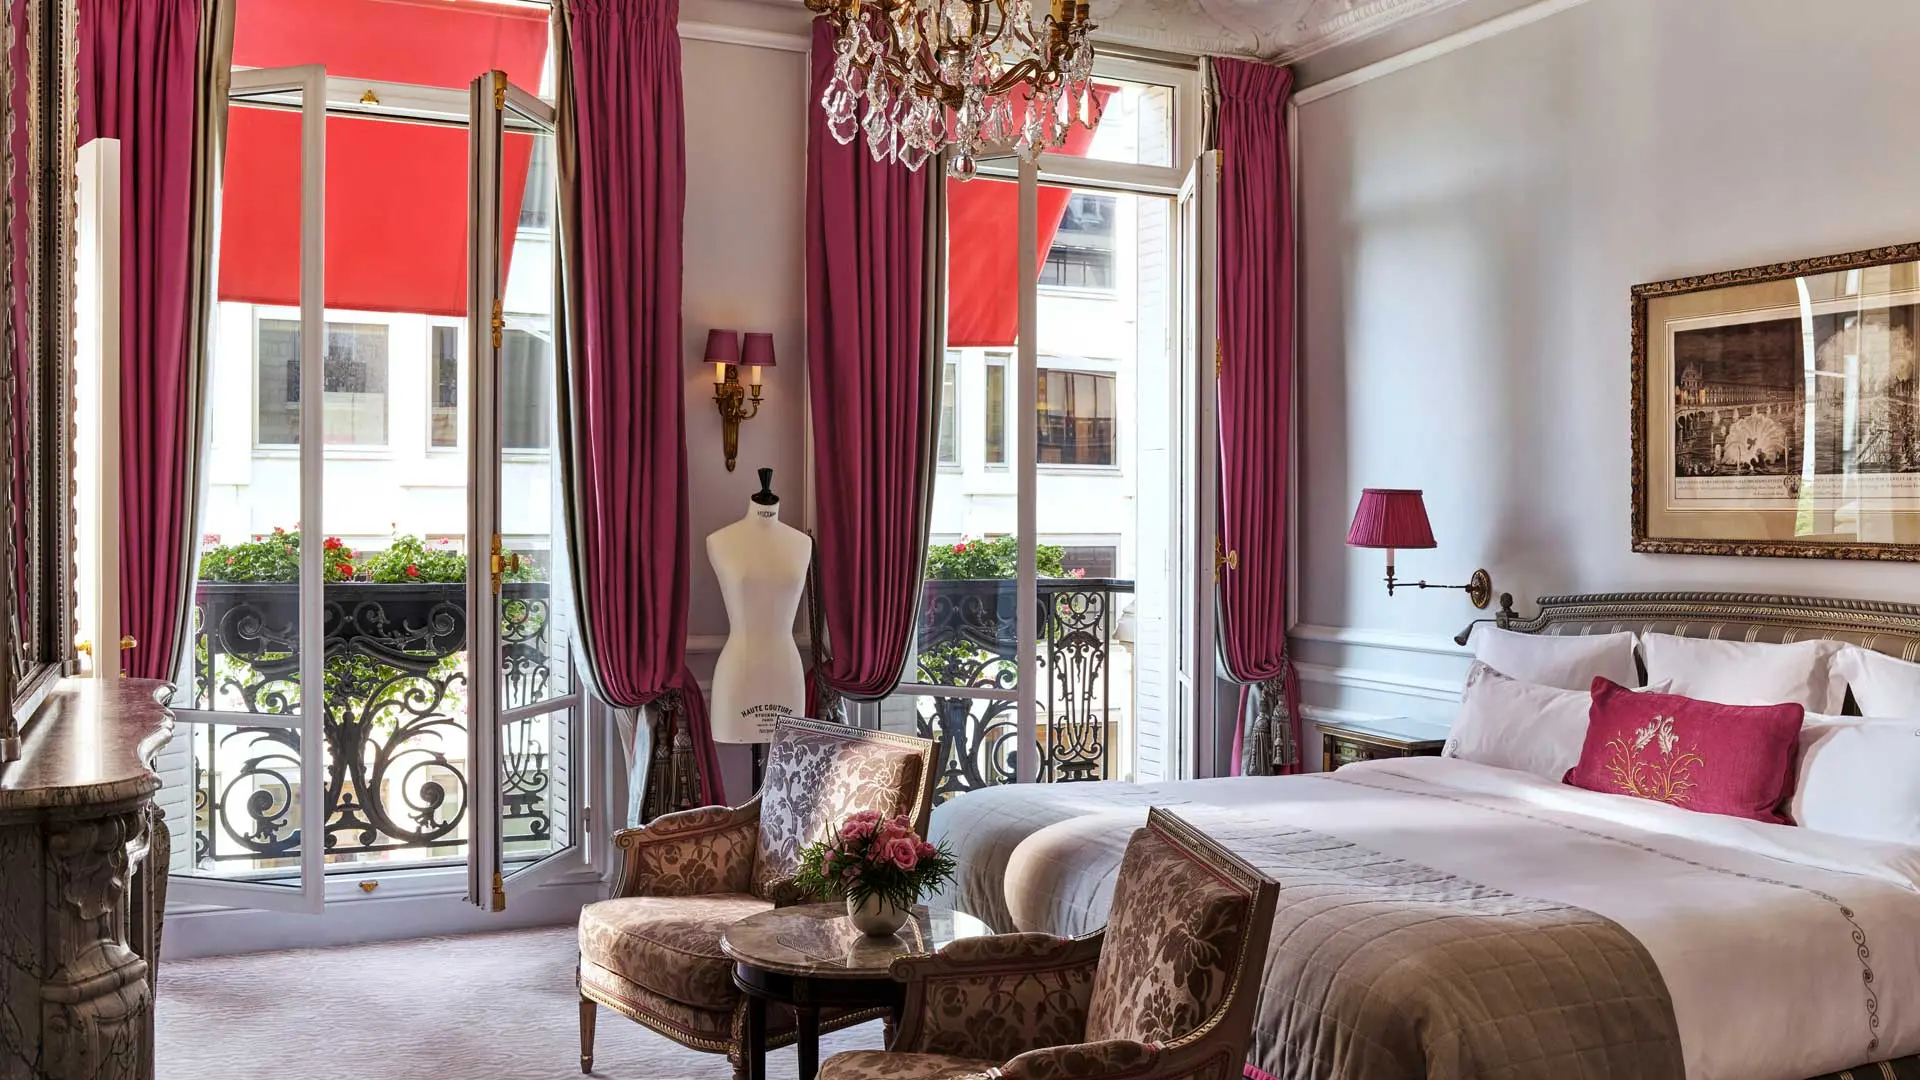 Hotel review Accommodation' - Hôtel Plaza Athénée Paris - 5